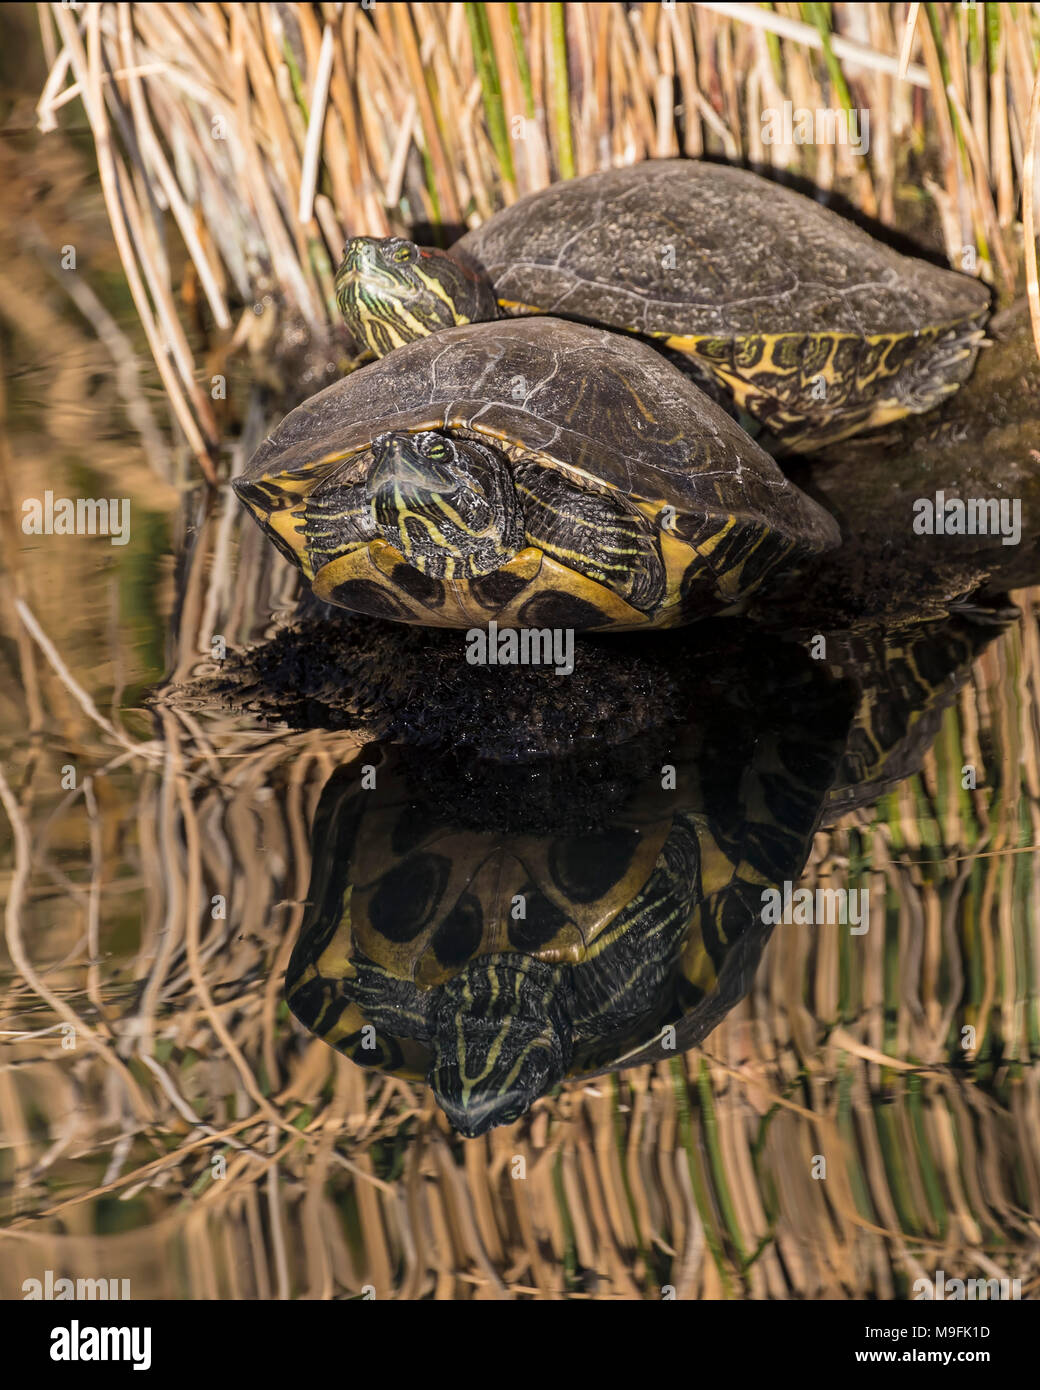 Turtles basking in the sun Stock Photo